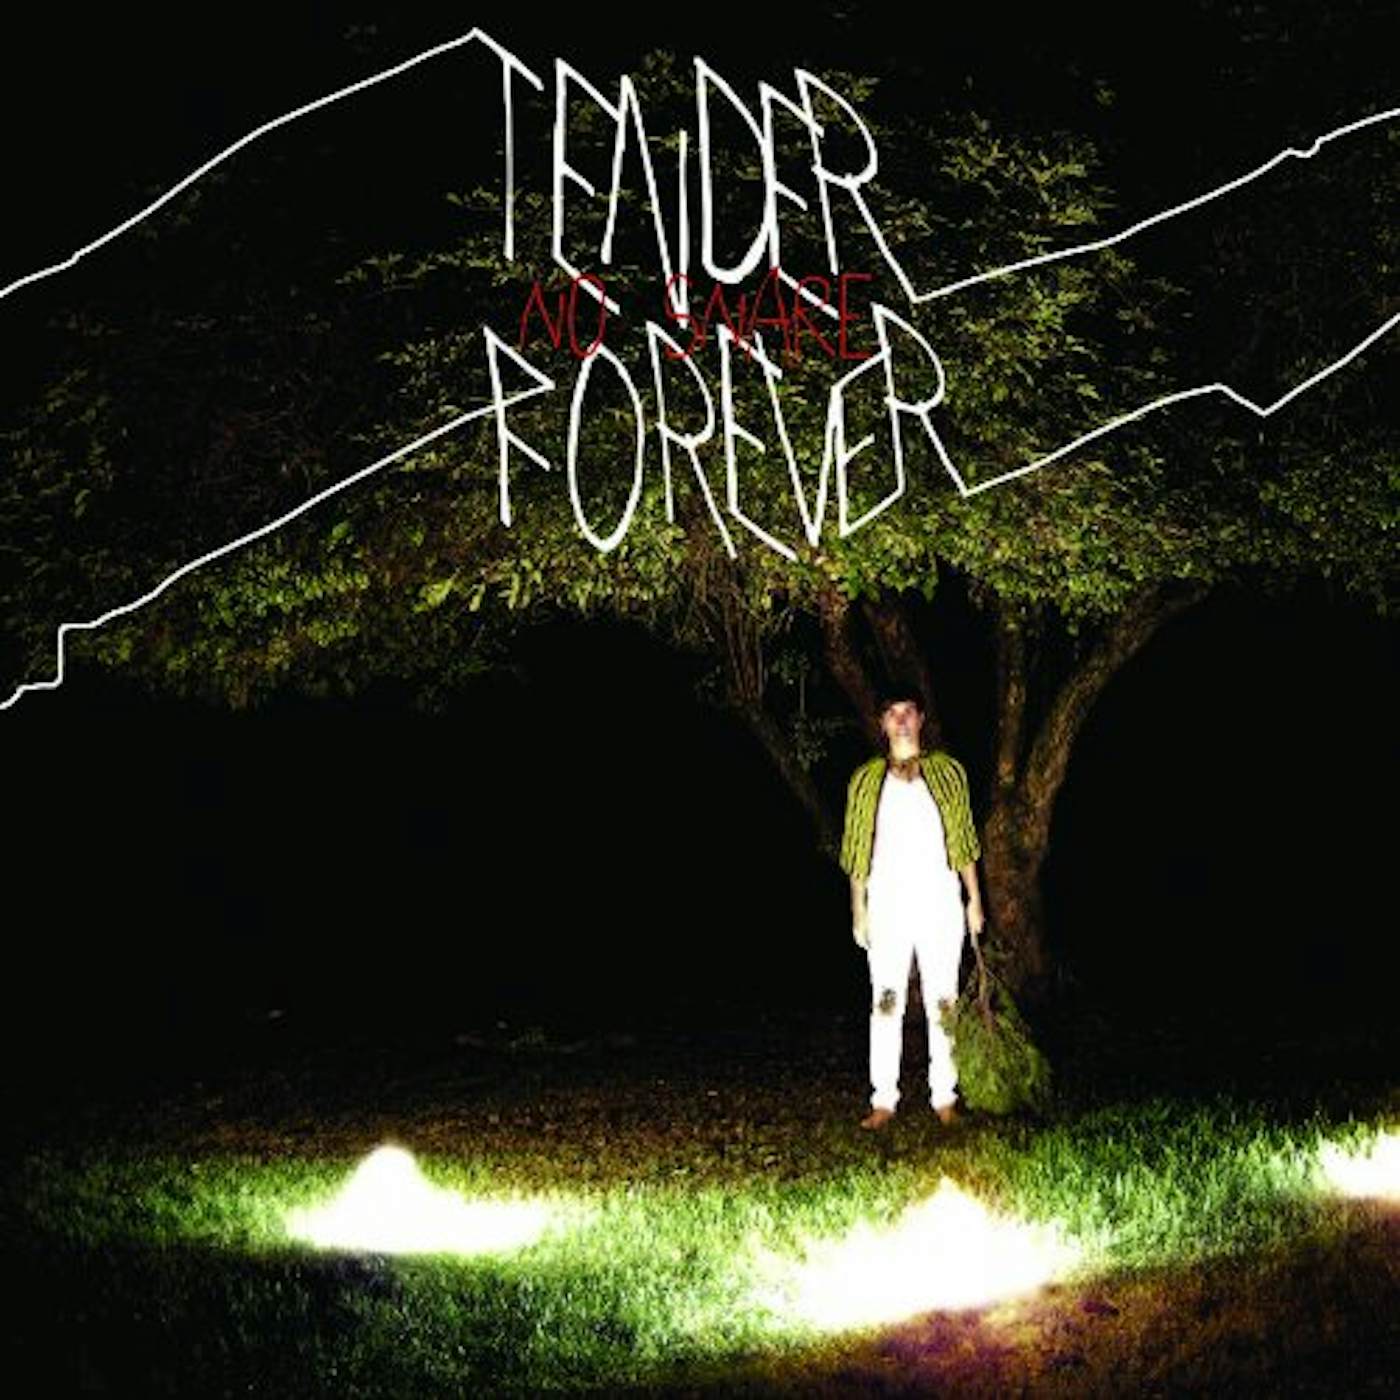 Tender Forever No Snare Vinyl Record